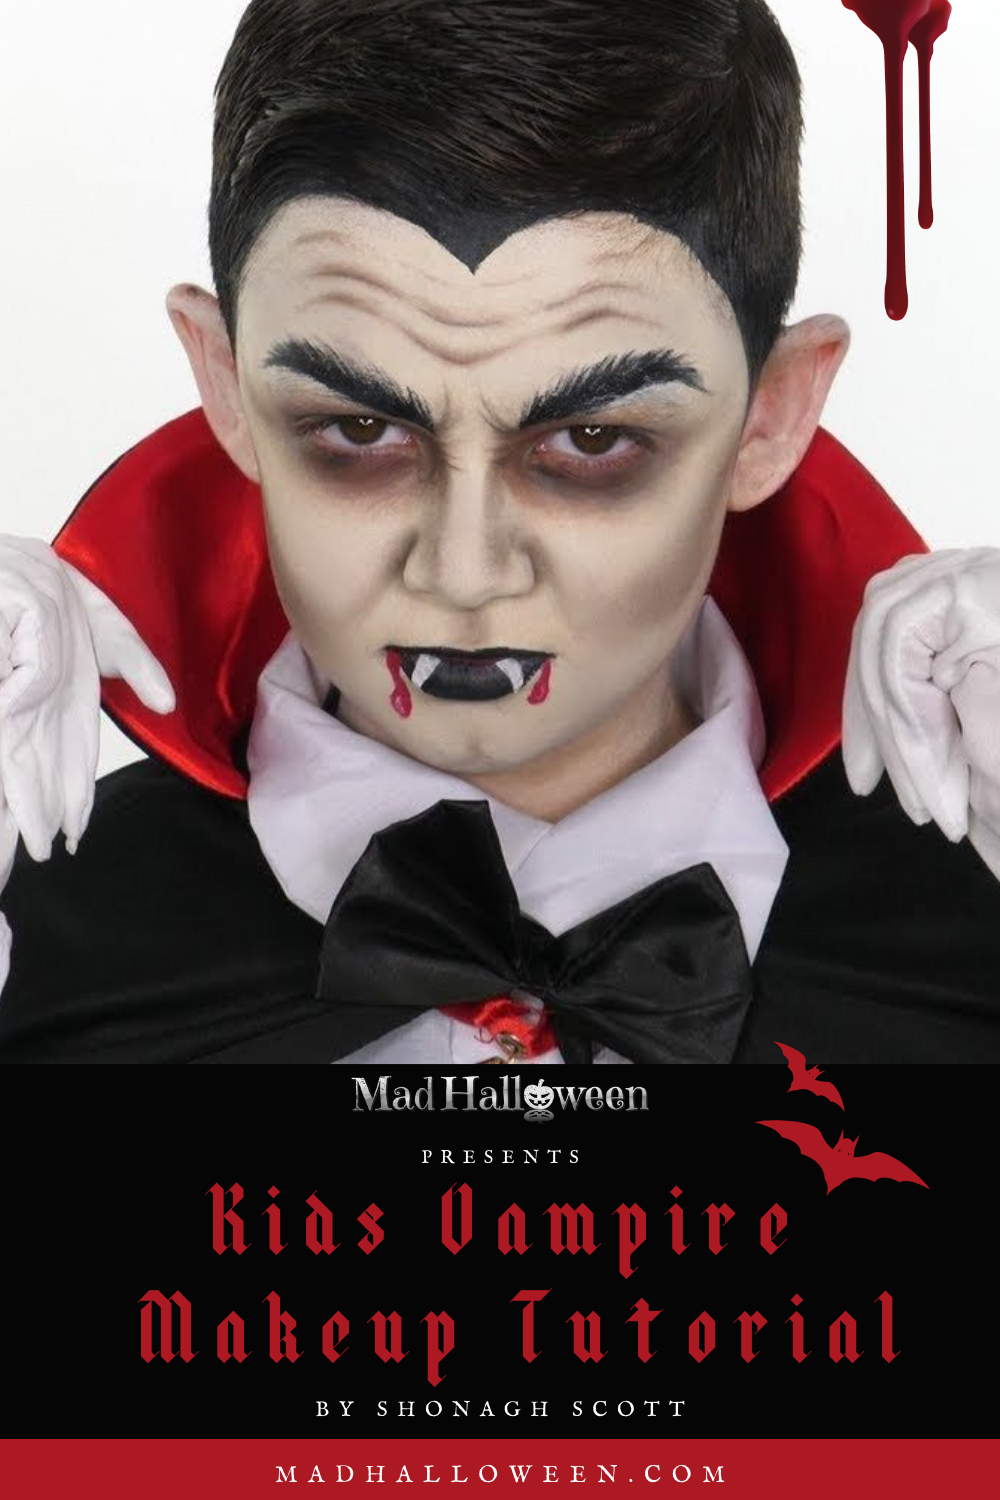 Kids Vampire Tutorial - Mad